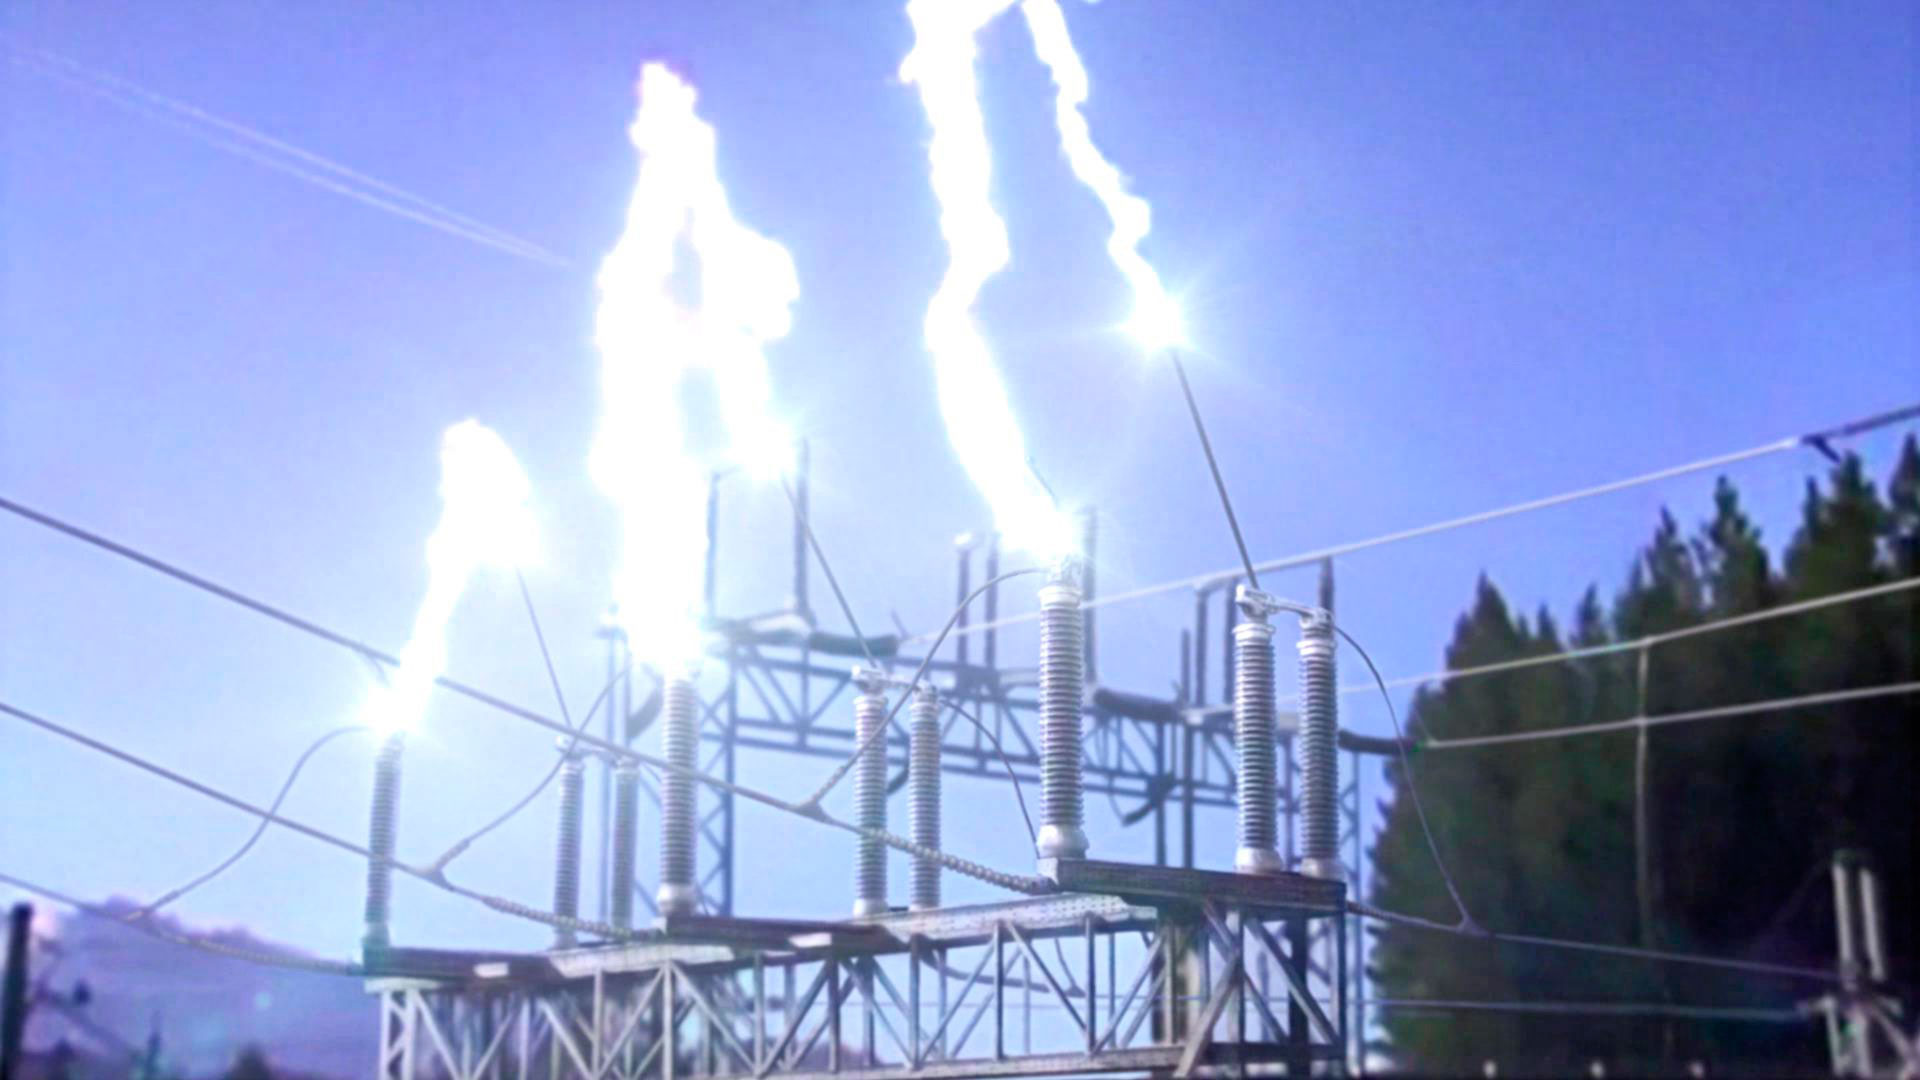 HR-Stamenov, 148 kv.” 2013, energy experiment, electrical substation, Bulgaria